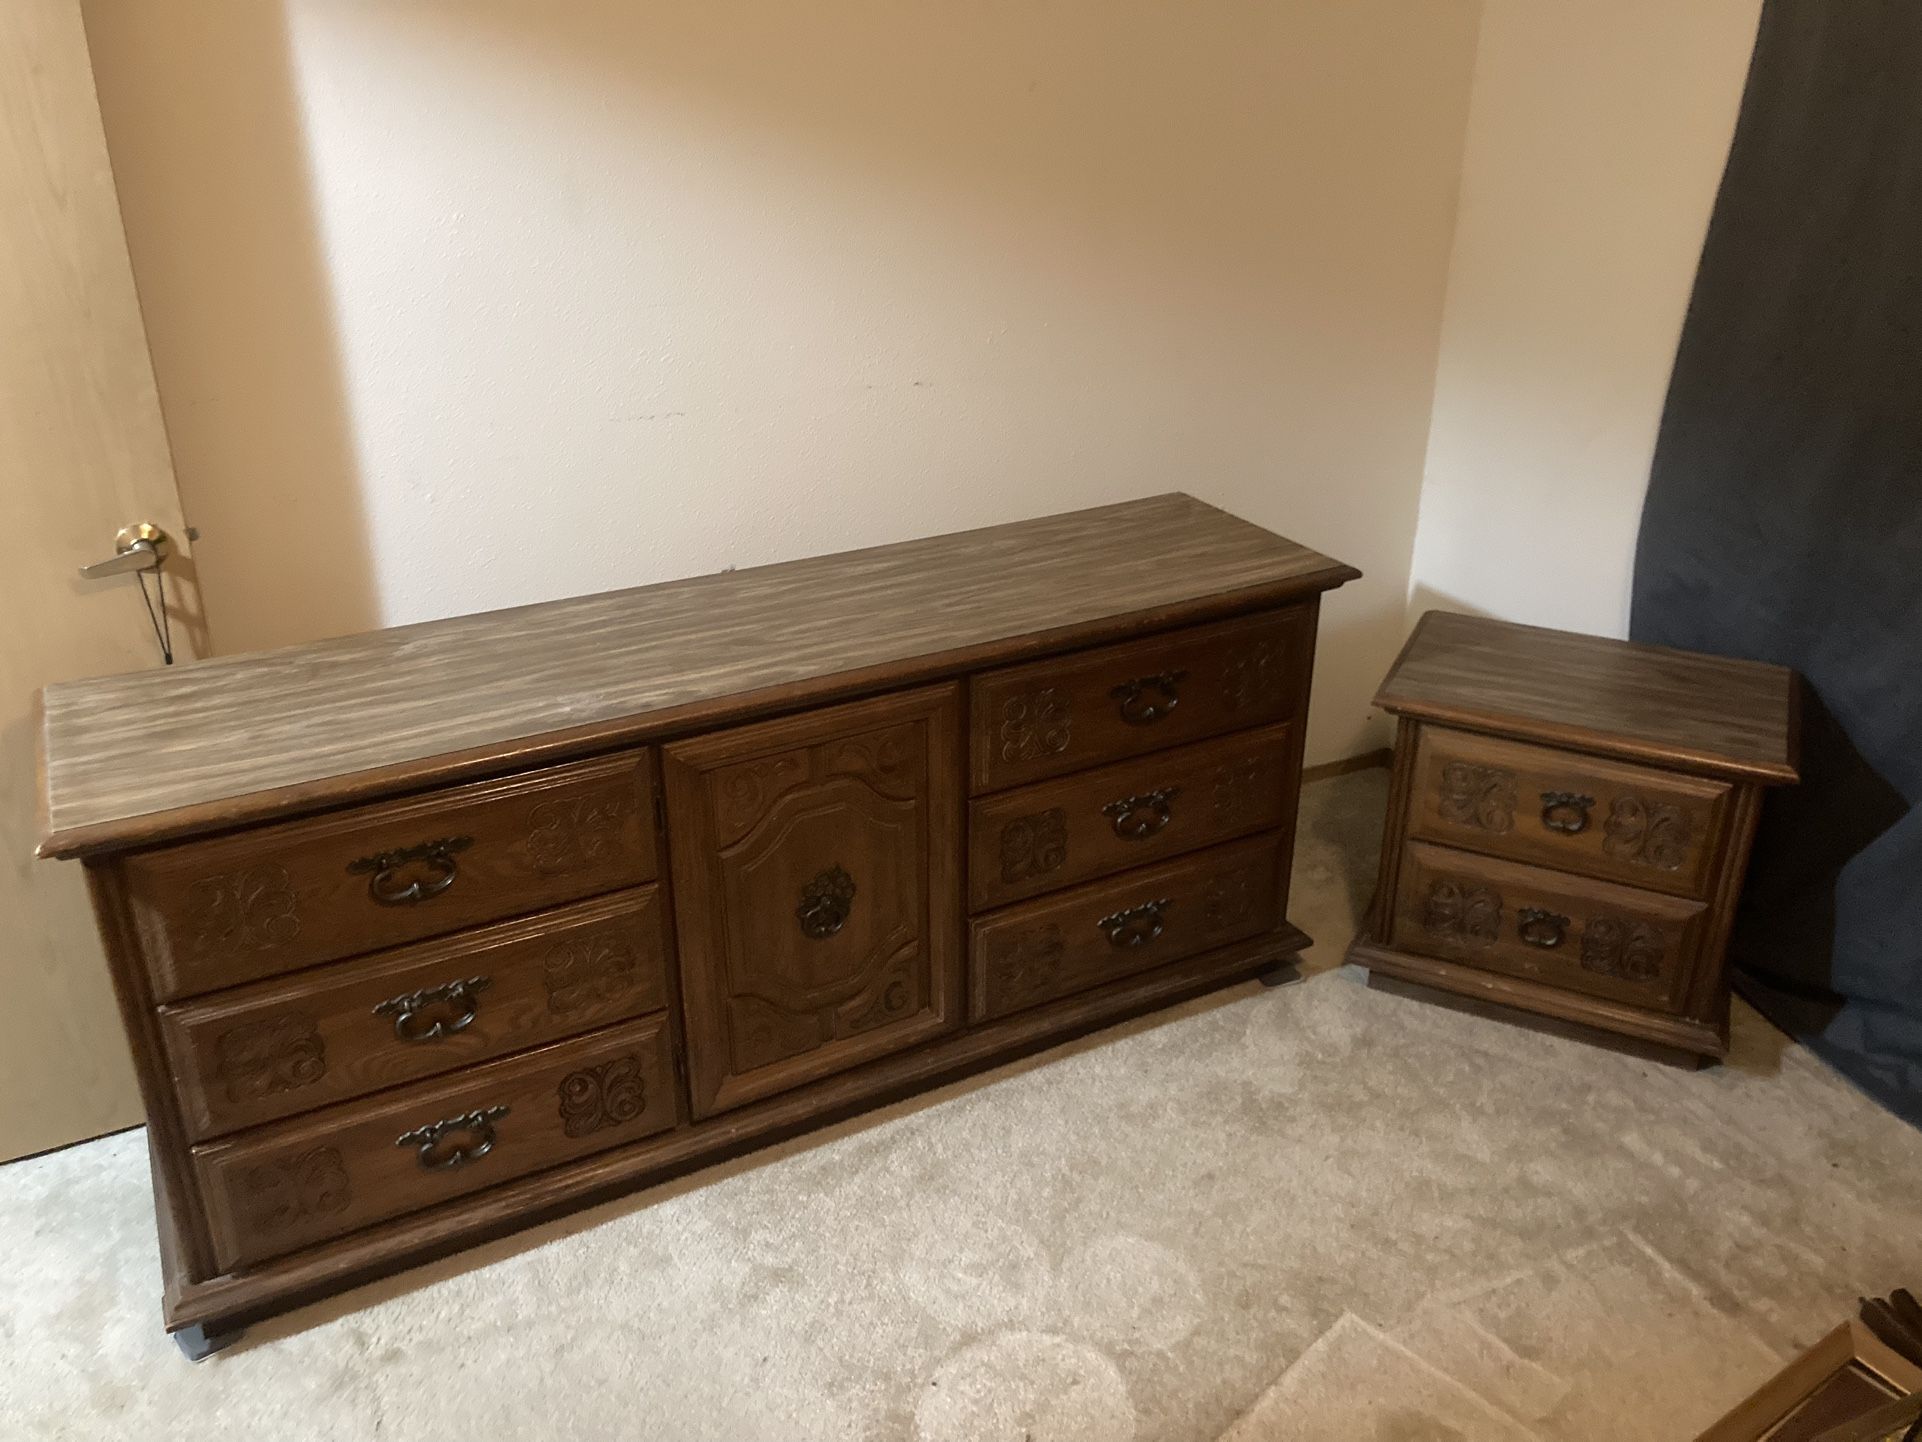 3 Piece Vintage Bedroom set: Dresser, Nightstand & Triple Dresser